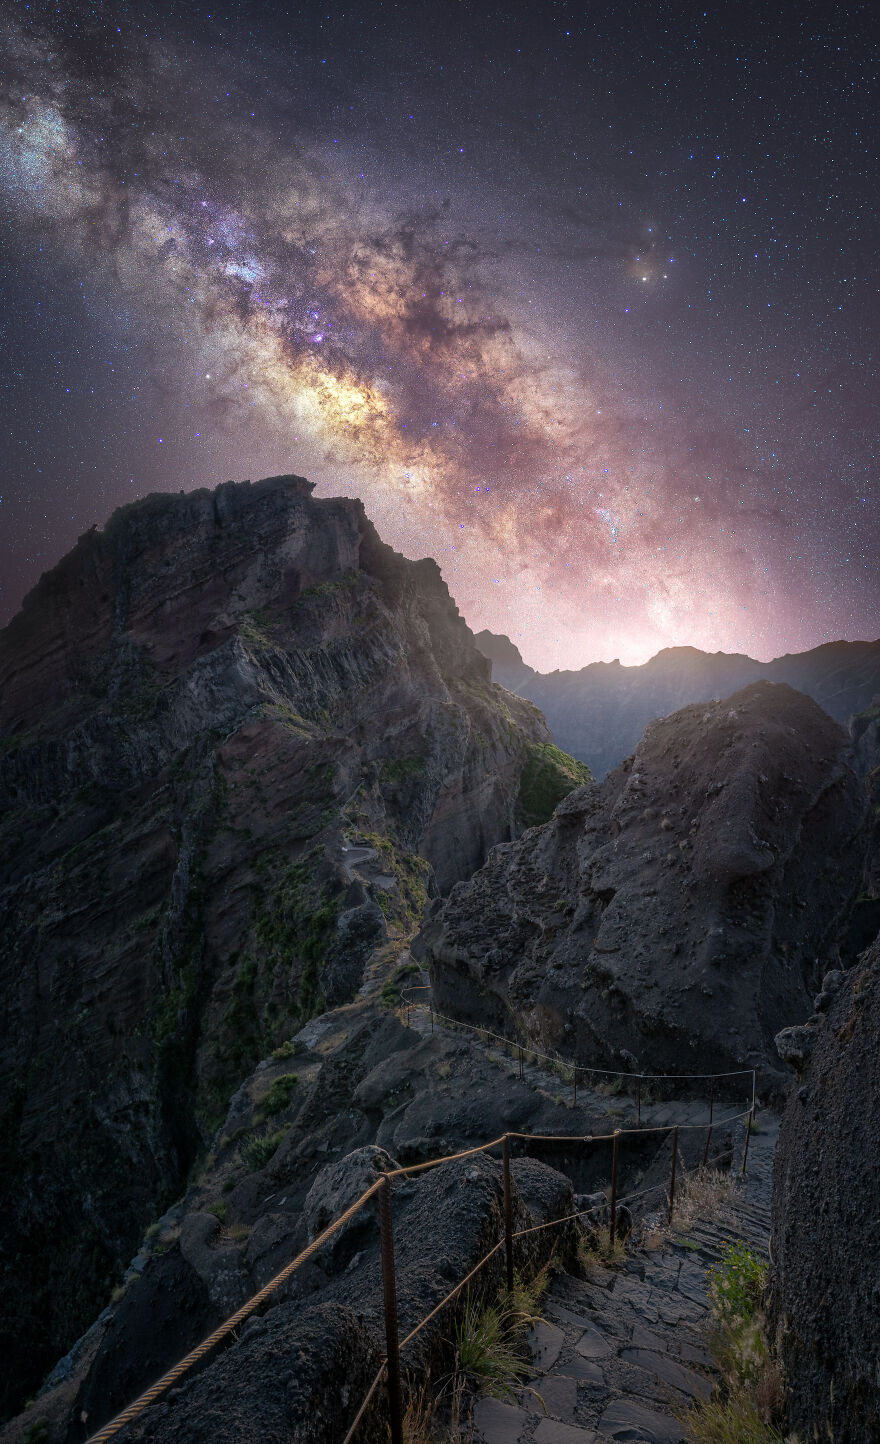 General 880x1444 nature landscape portrait display night mountains rocks stars Milky Way Alexander Forst starry night